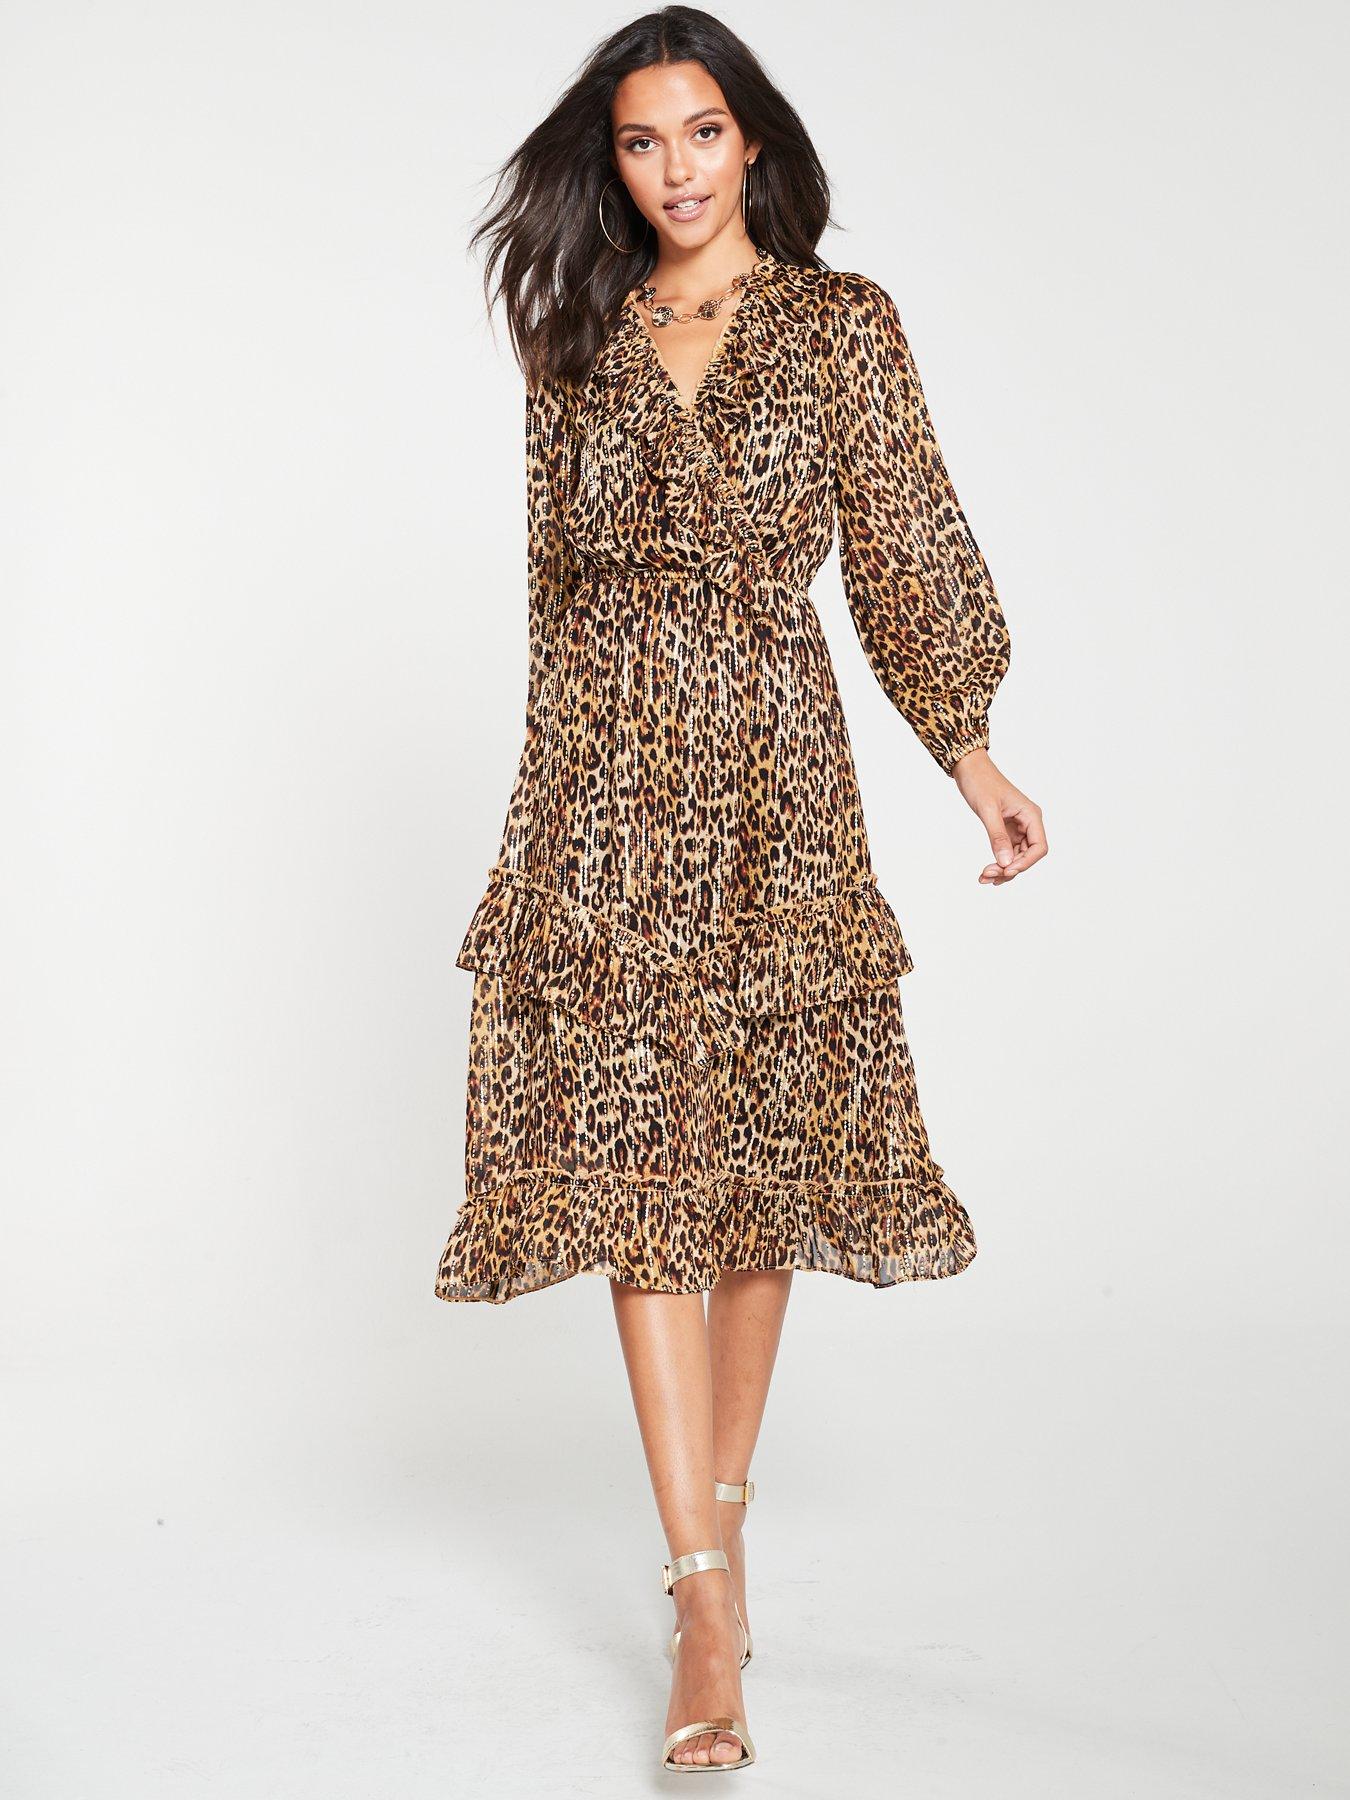 very leopard print dress